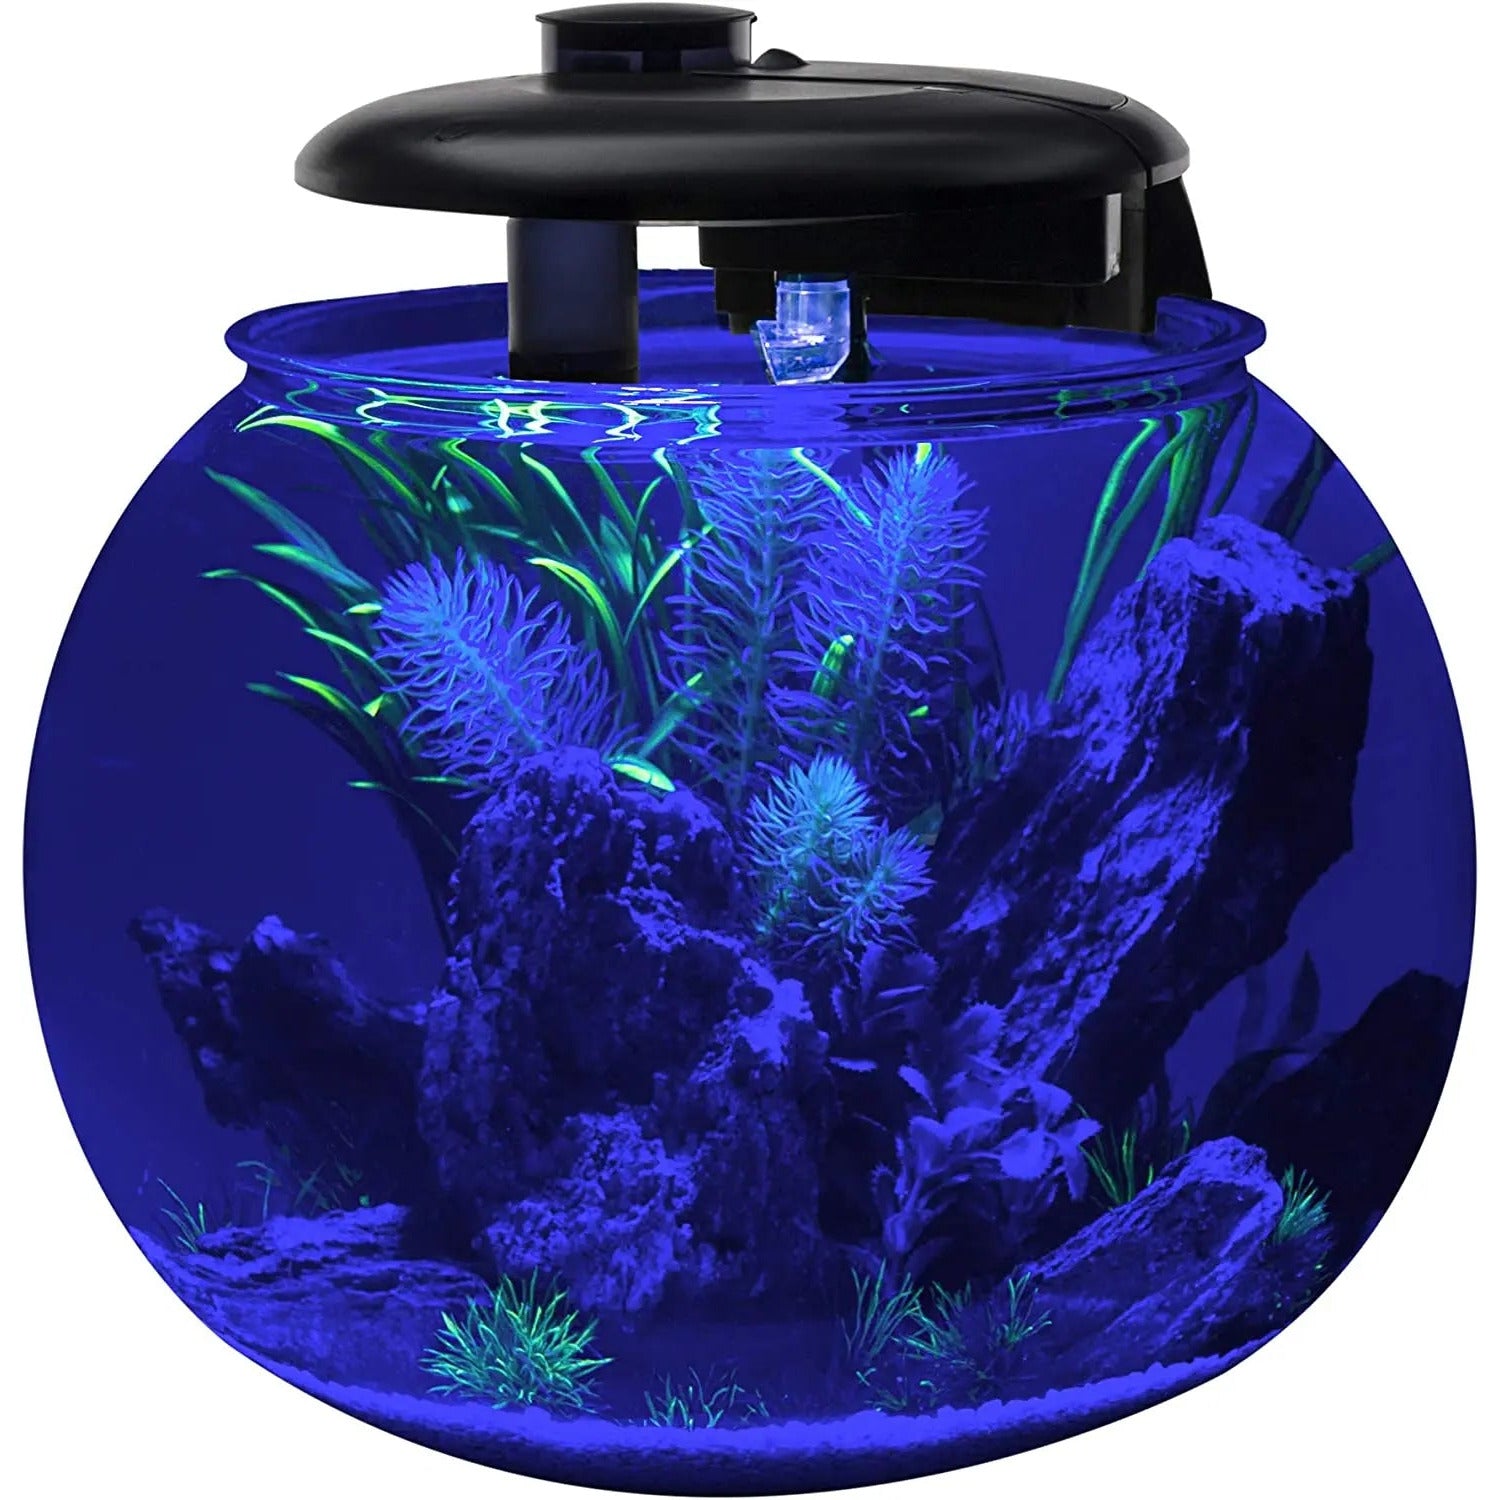 Penn-Plax AquaSphere Aquarium for Freshwater and Saltwater Filtration System and LED Light Display Penn-Plax Aqua